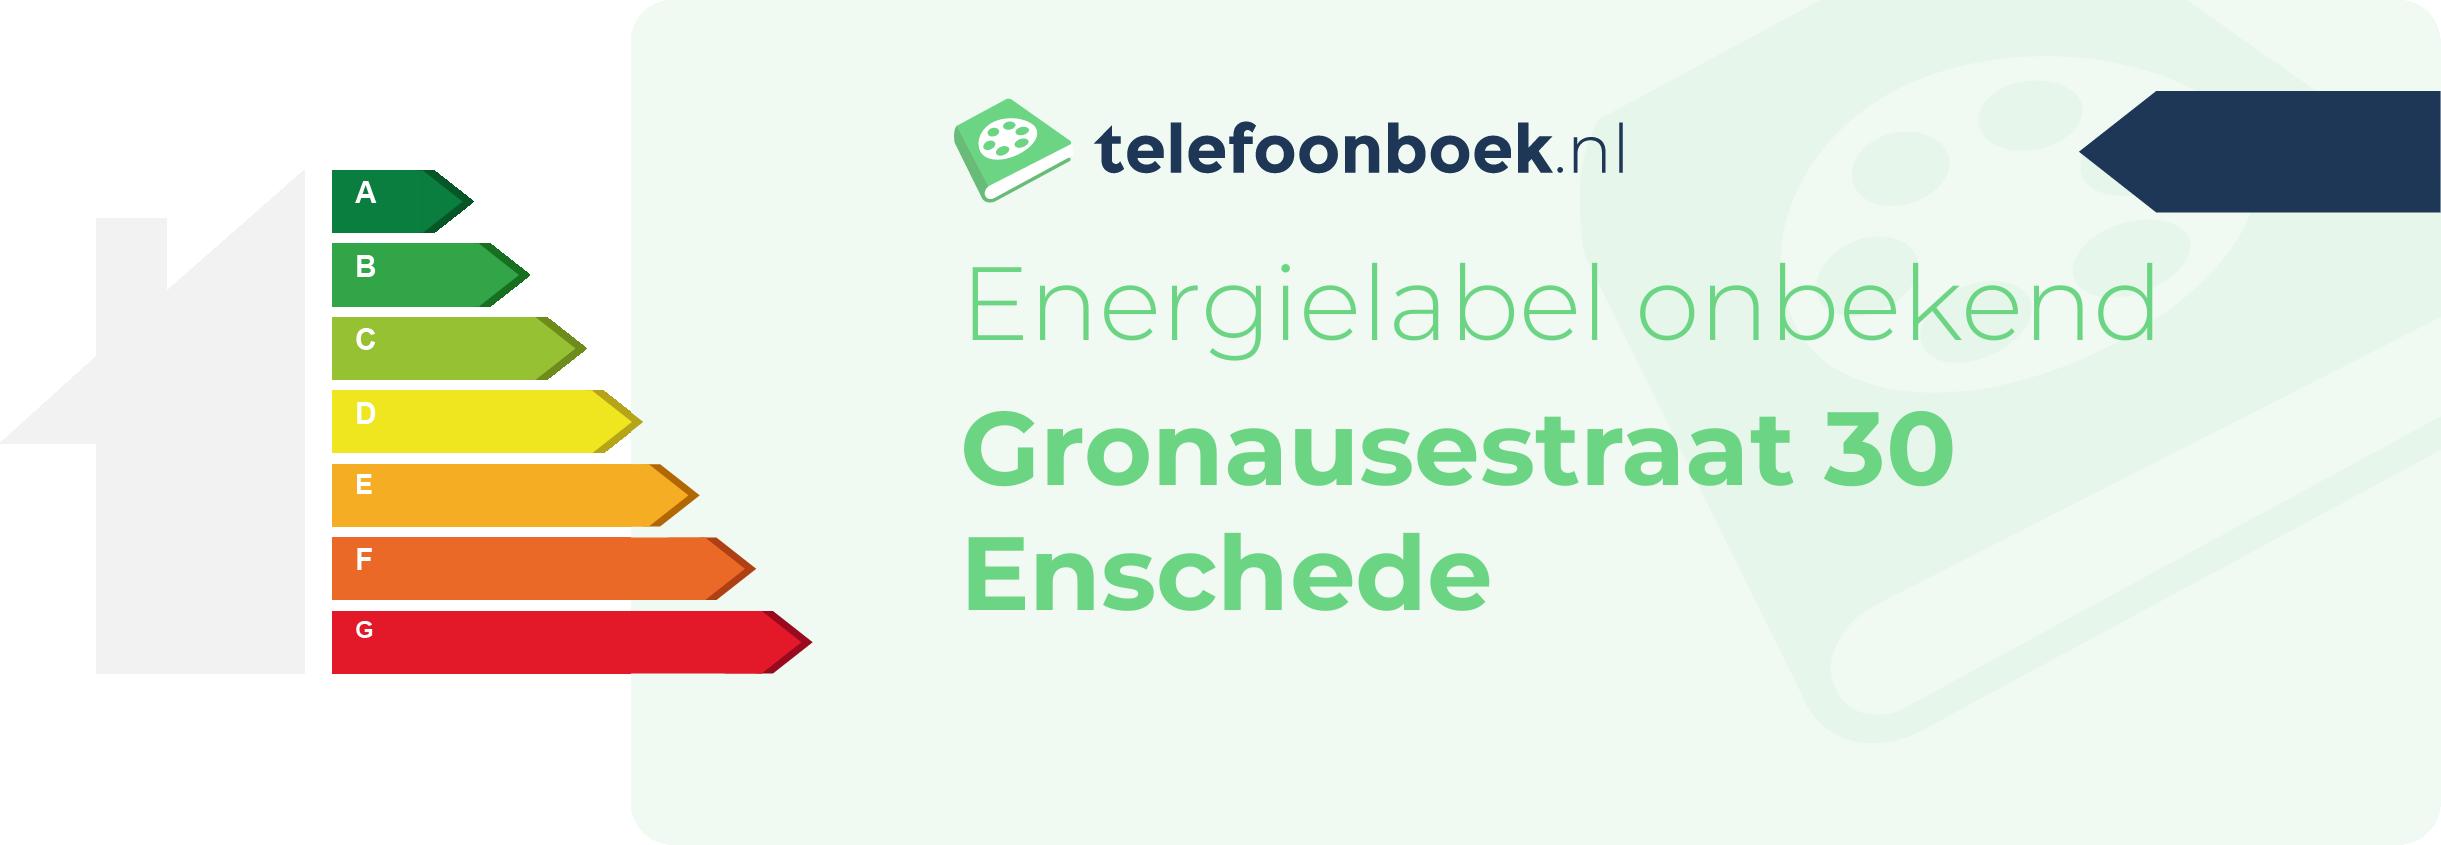 Energielabel Gronausestraat 30 Enschede